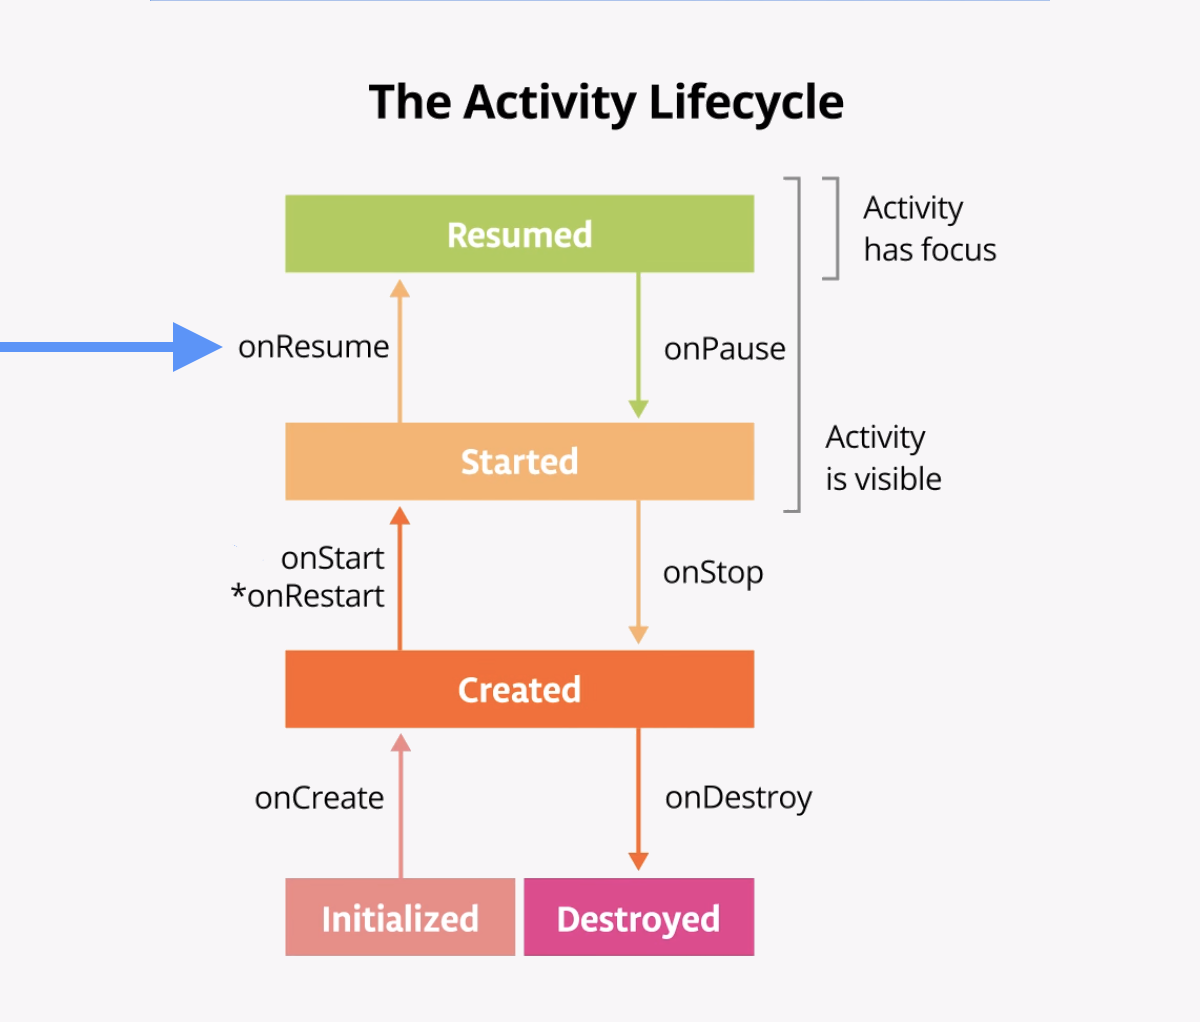 The Activity Lifecycle scheme